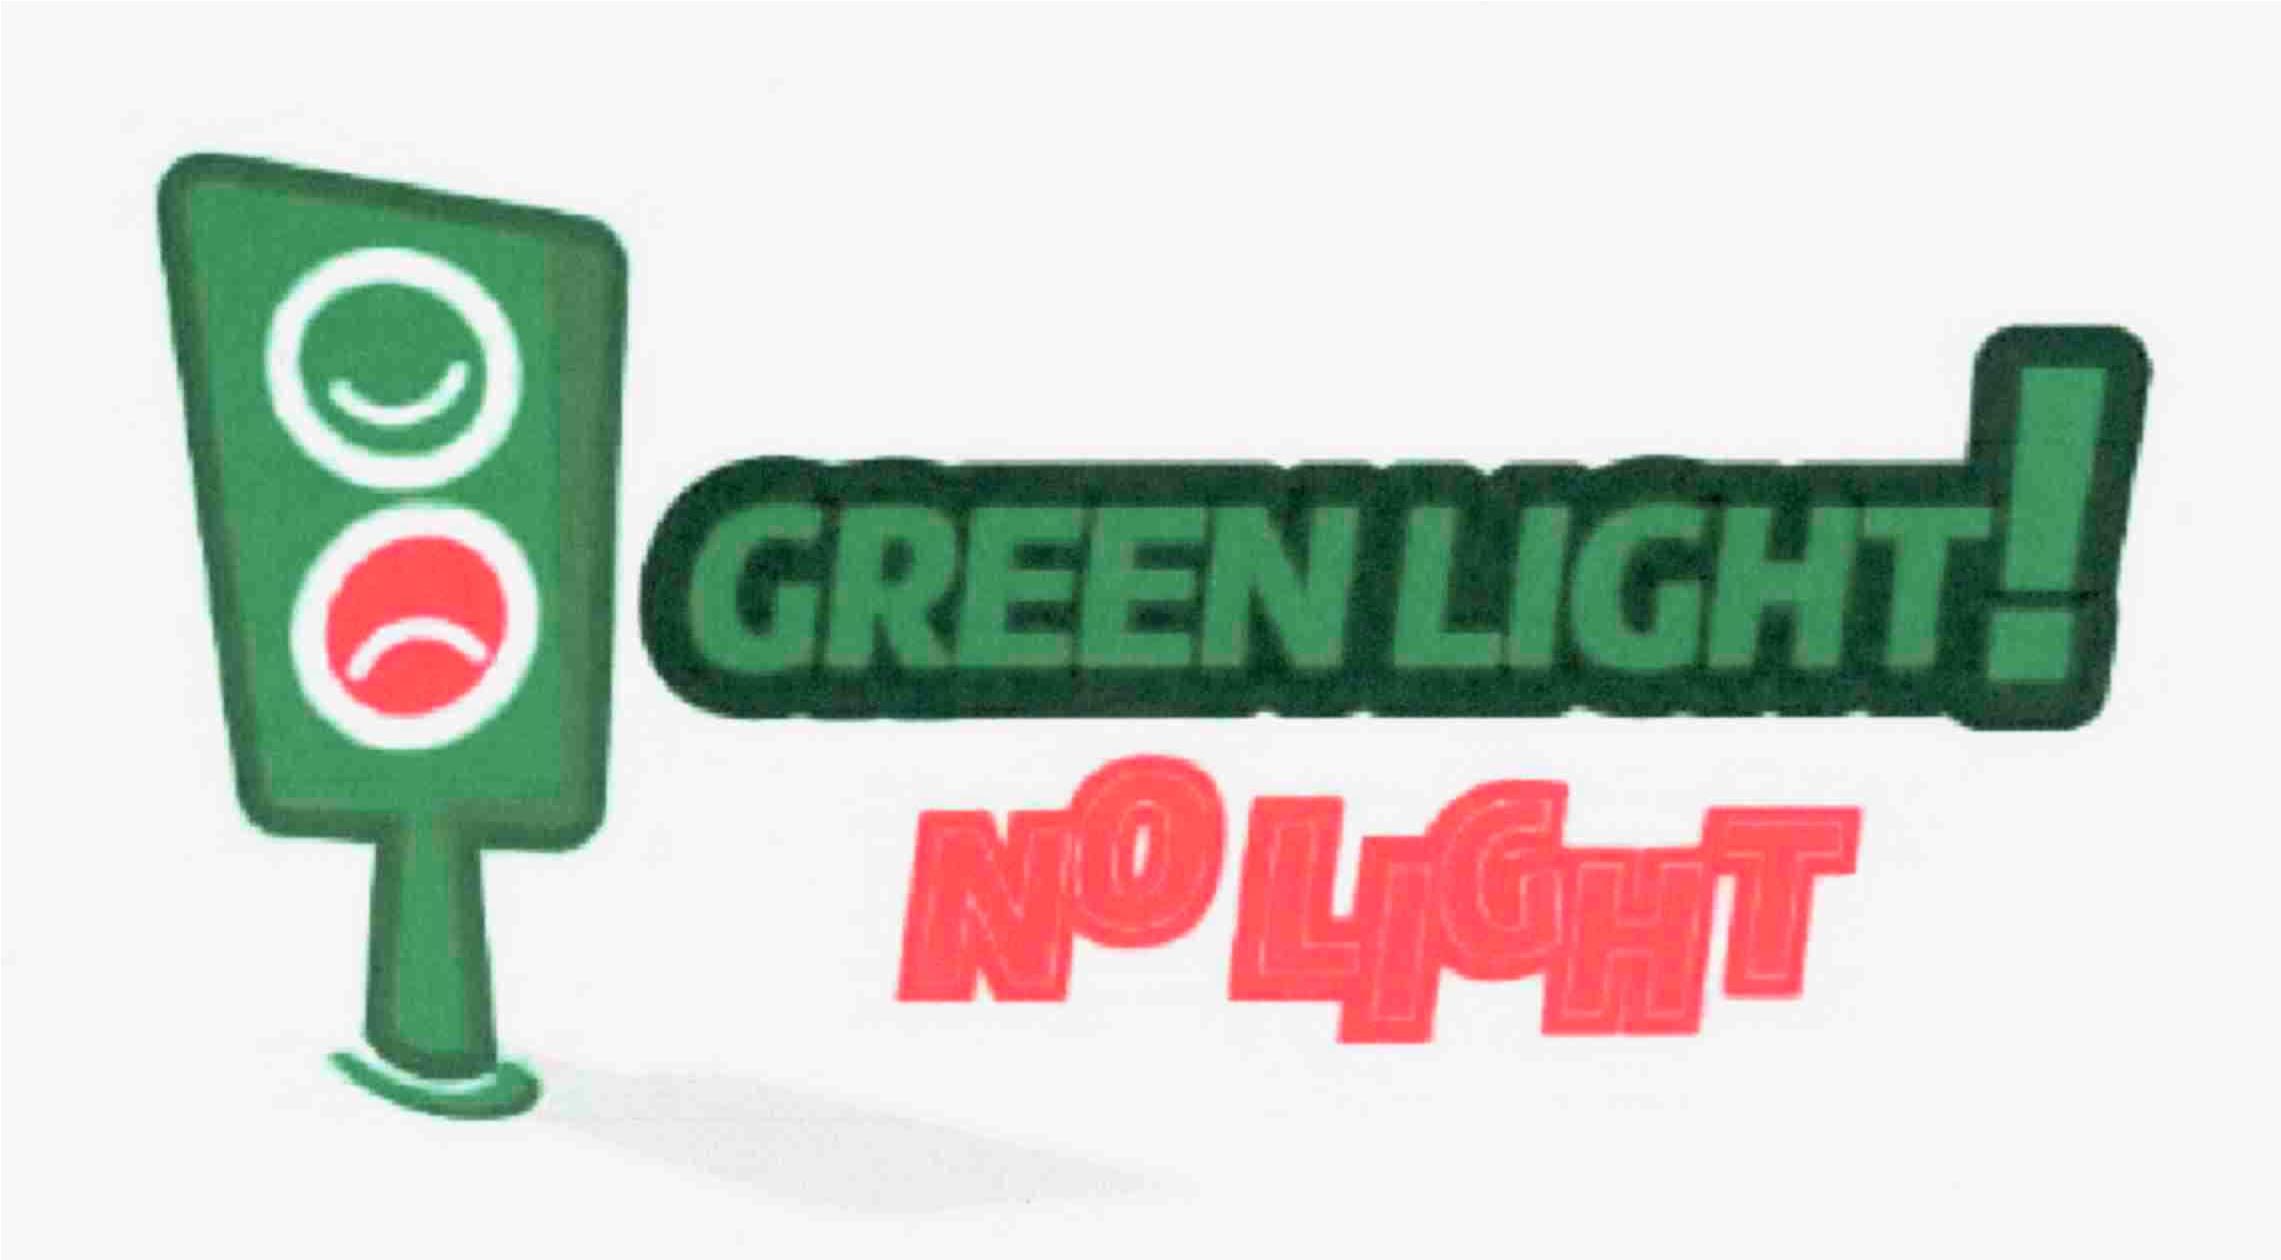  GREEN LIGHT! NO LIGHT